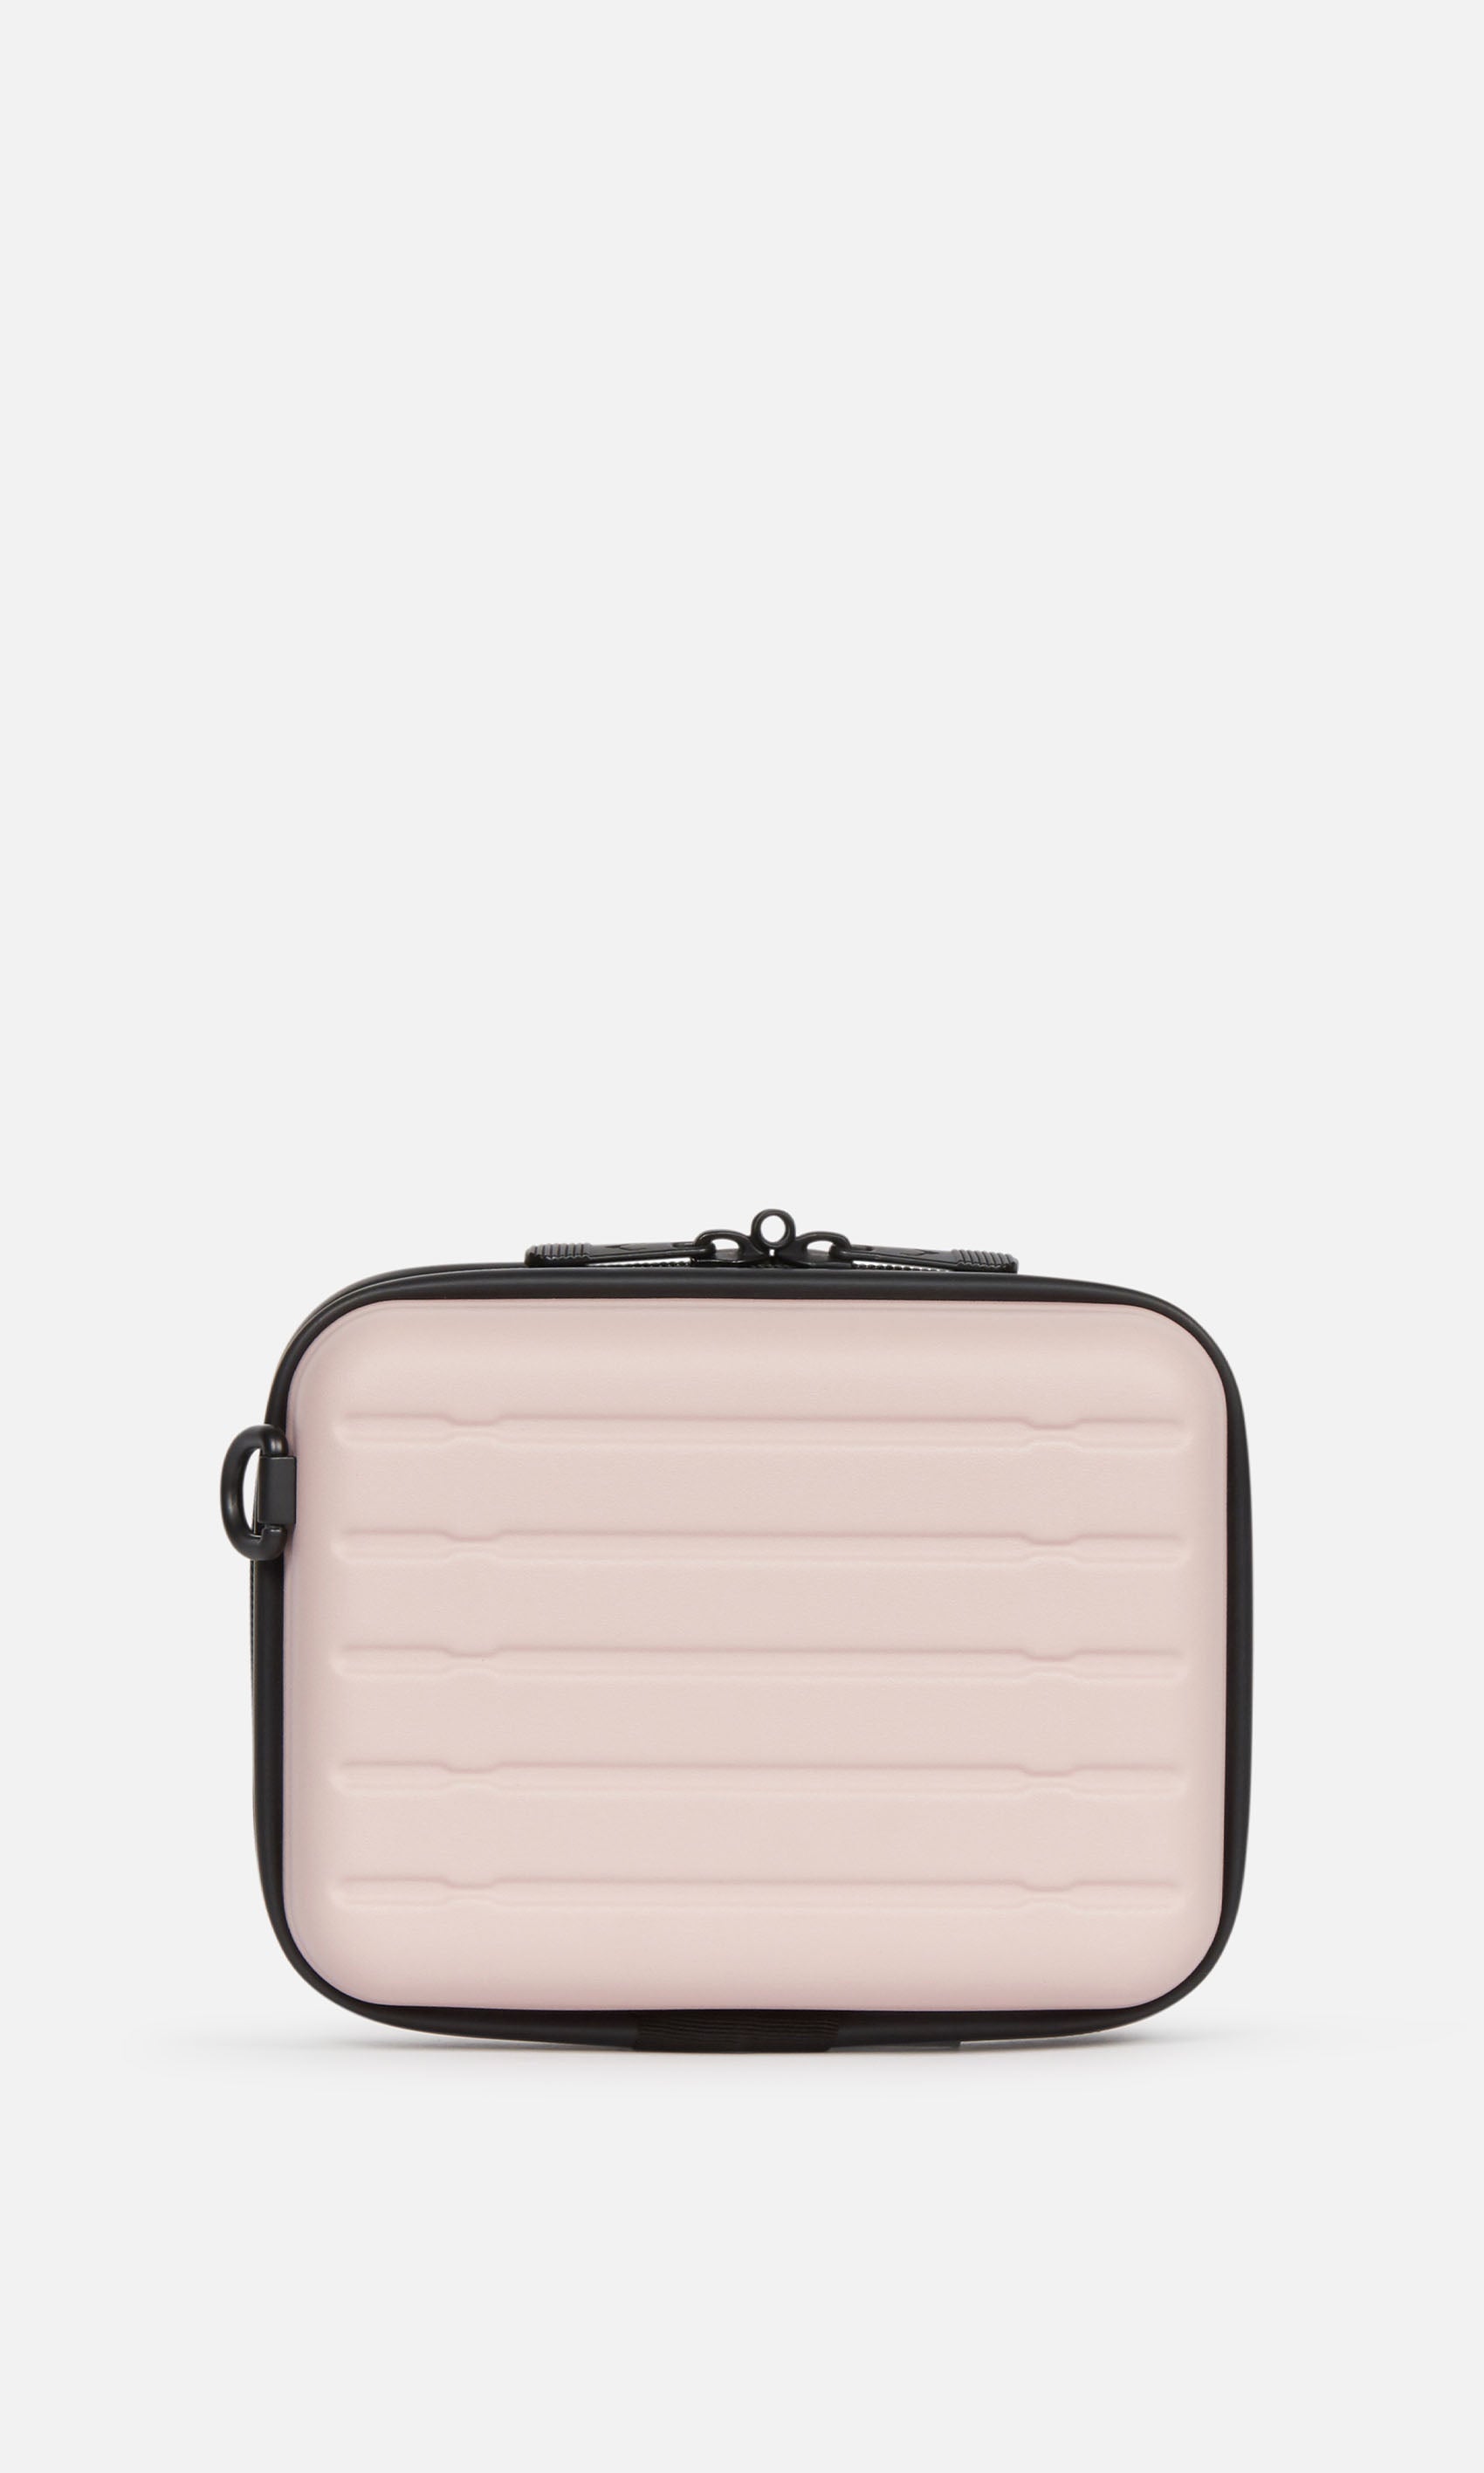 Antler Luggage -  Stamford mini crossbody in putty - Hard Suitcases Stamford Mini Crossbody Putty (Pink) | Travel Accessories | Antler 